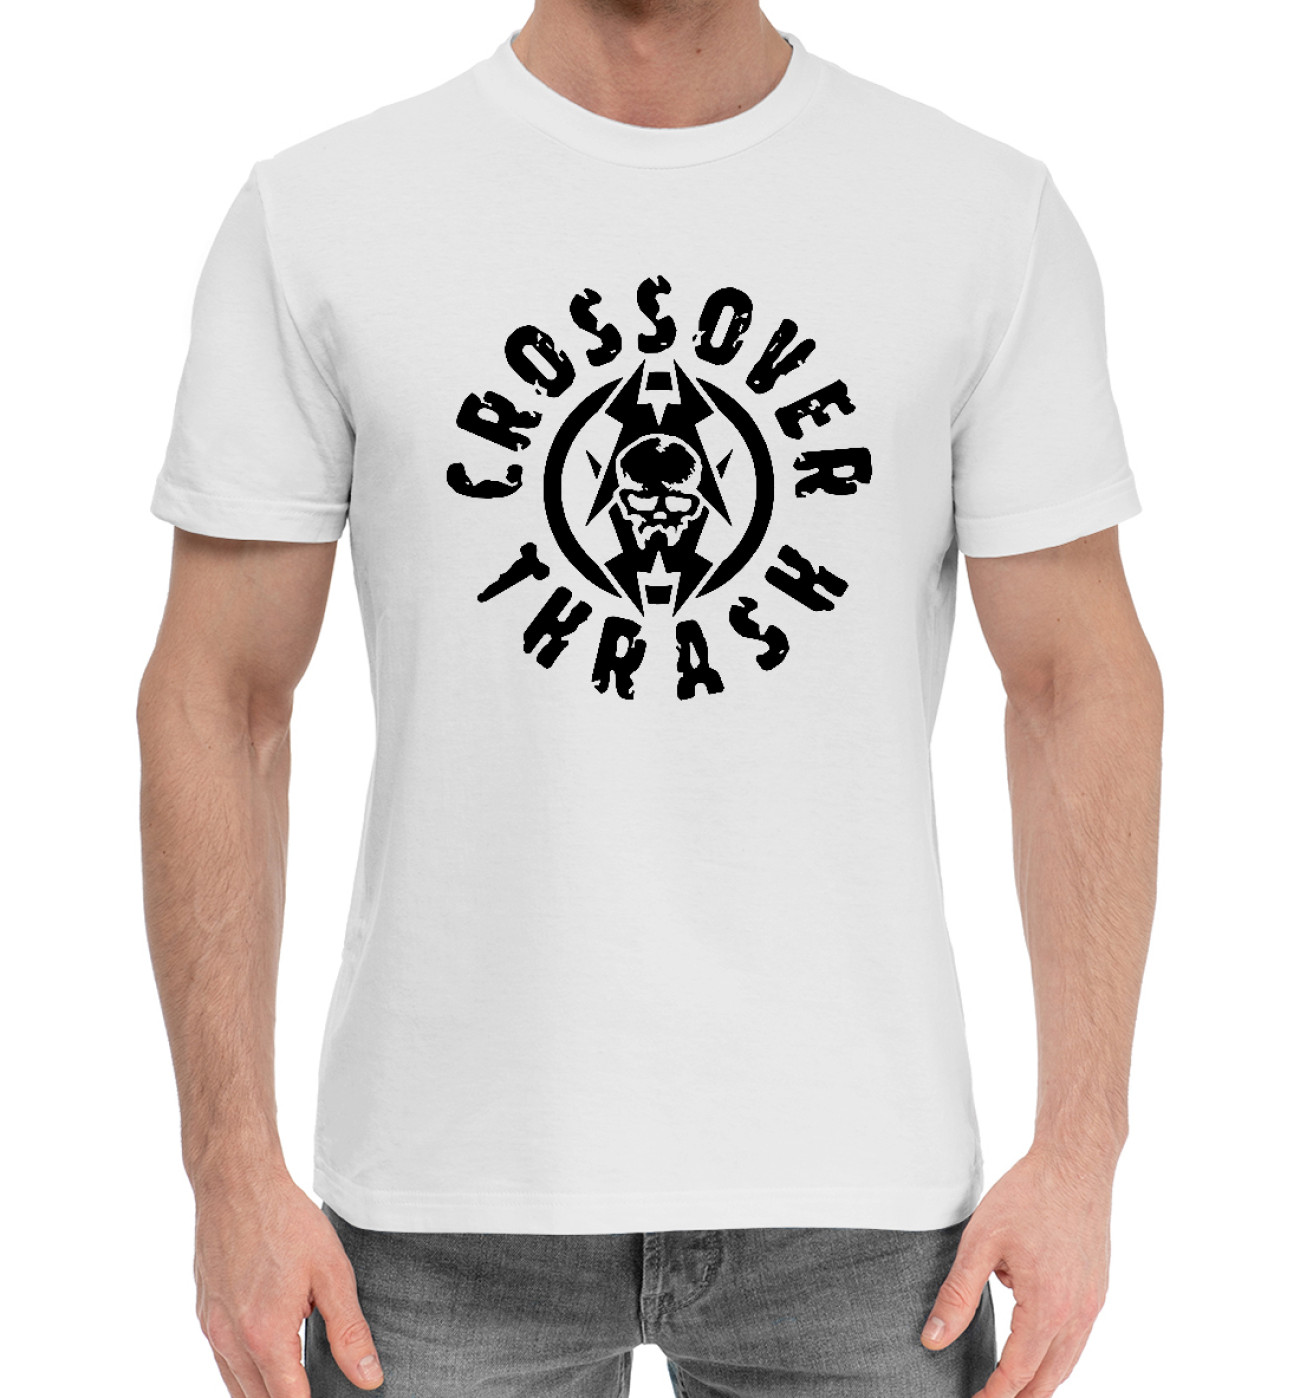 Мужская Хлопковая футболка Crossover Thrash, артикул: MWE-253702-hfu-2